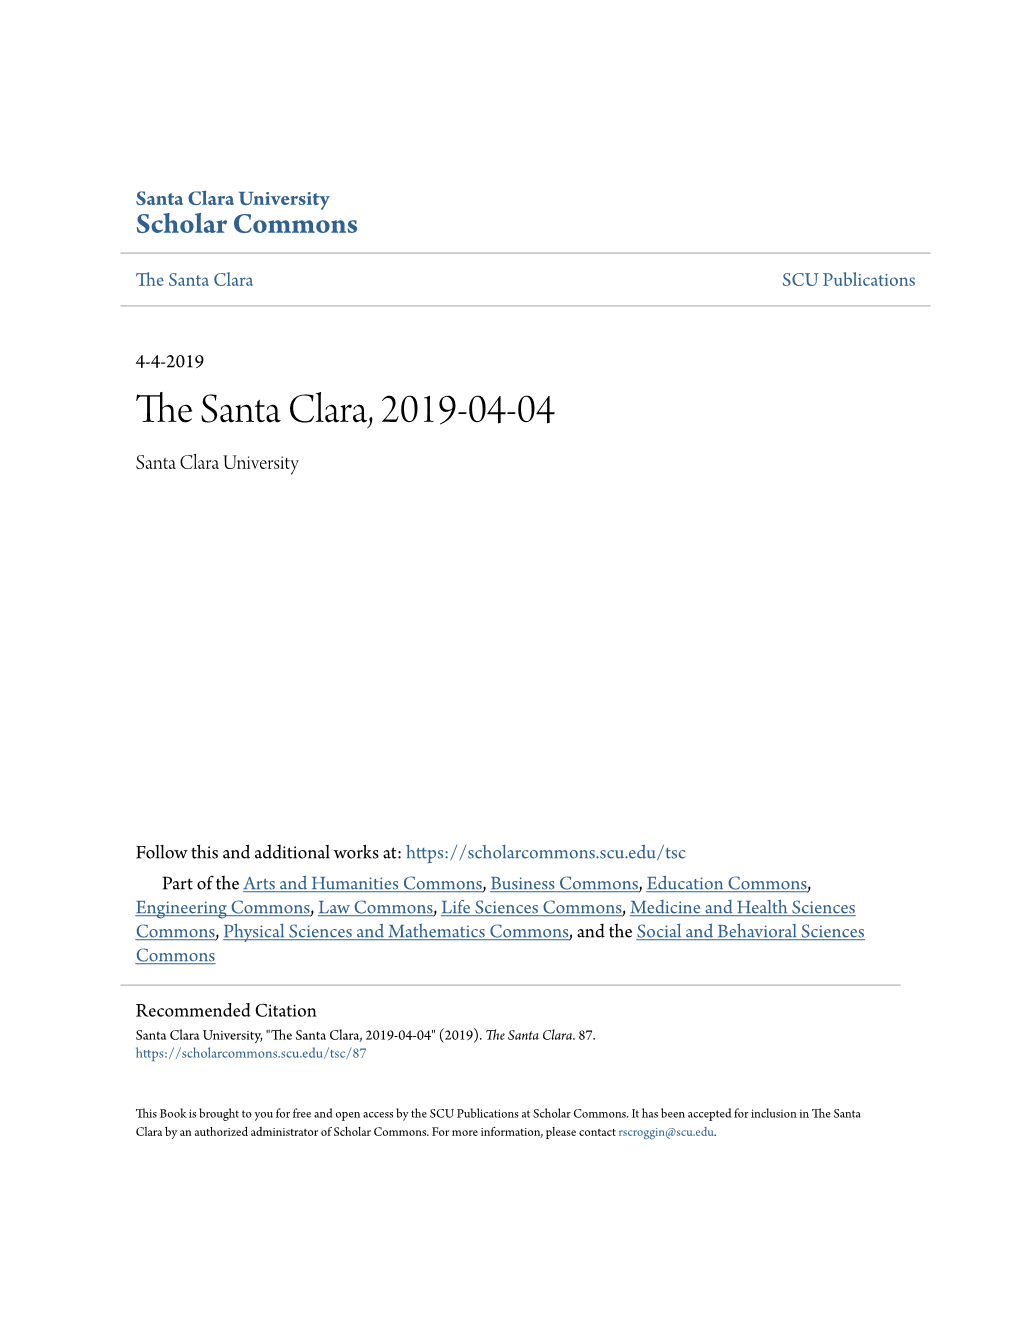 The Santa Clara, 2019-04-04